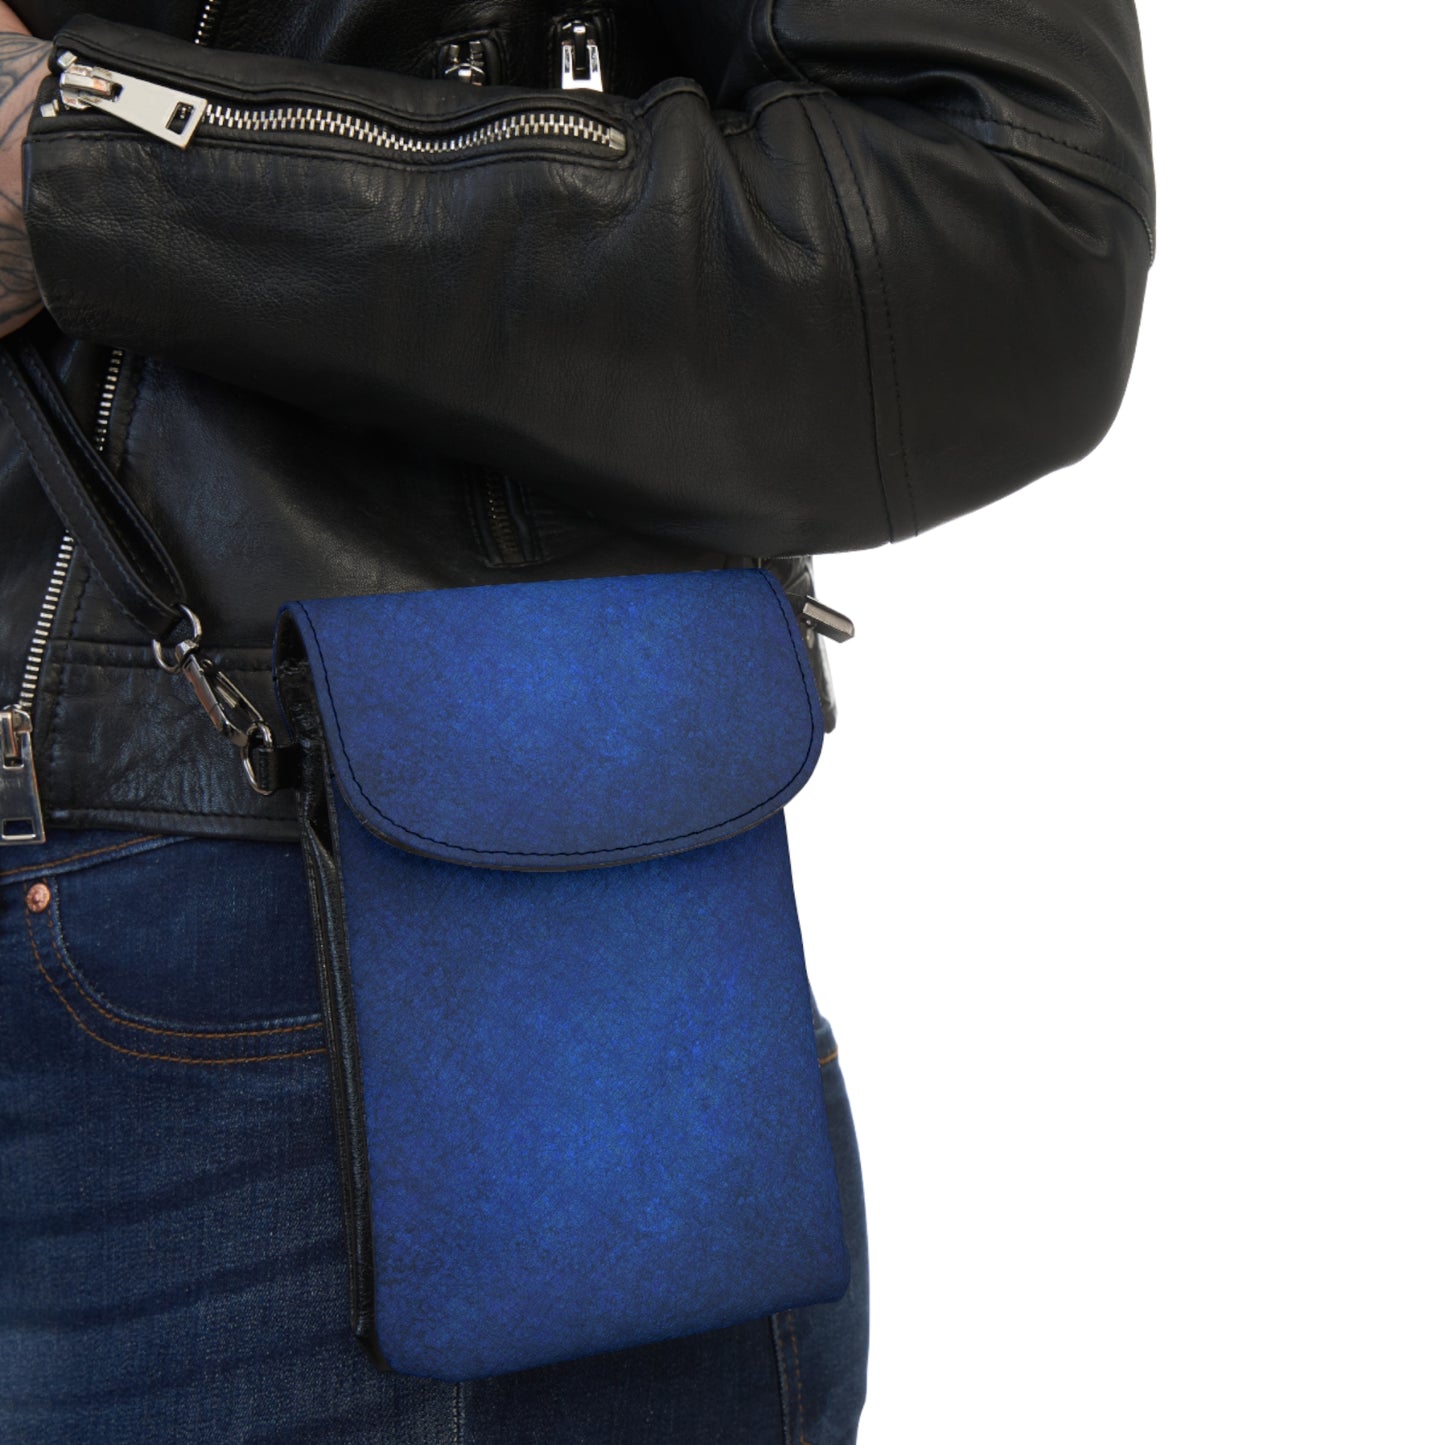 Abstract Blue Crossbody Phone Bag